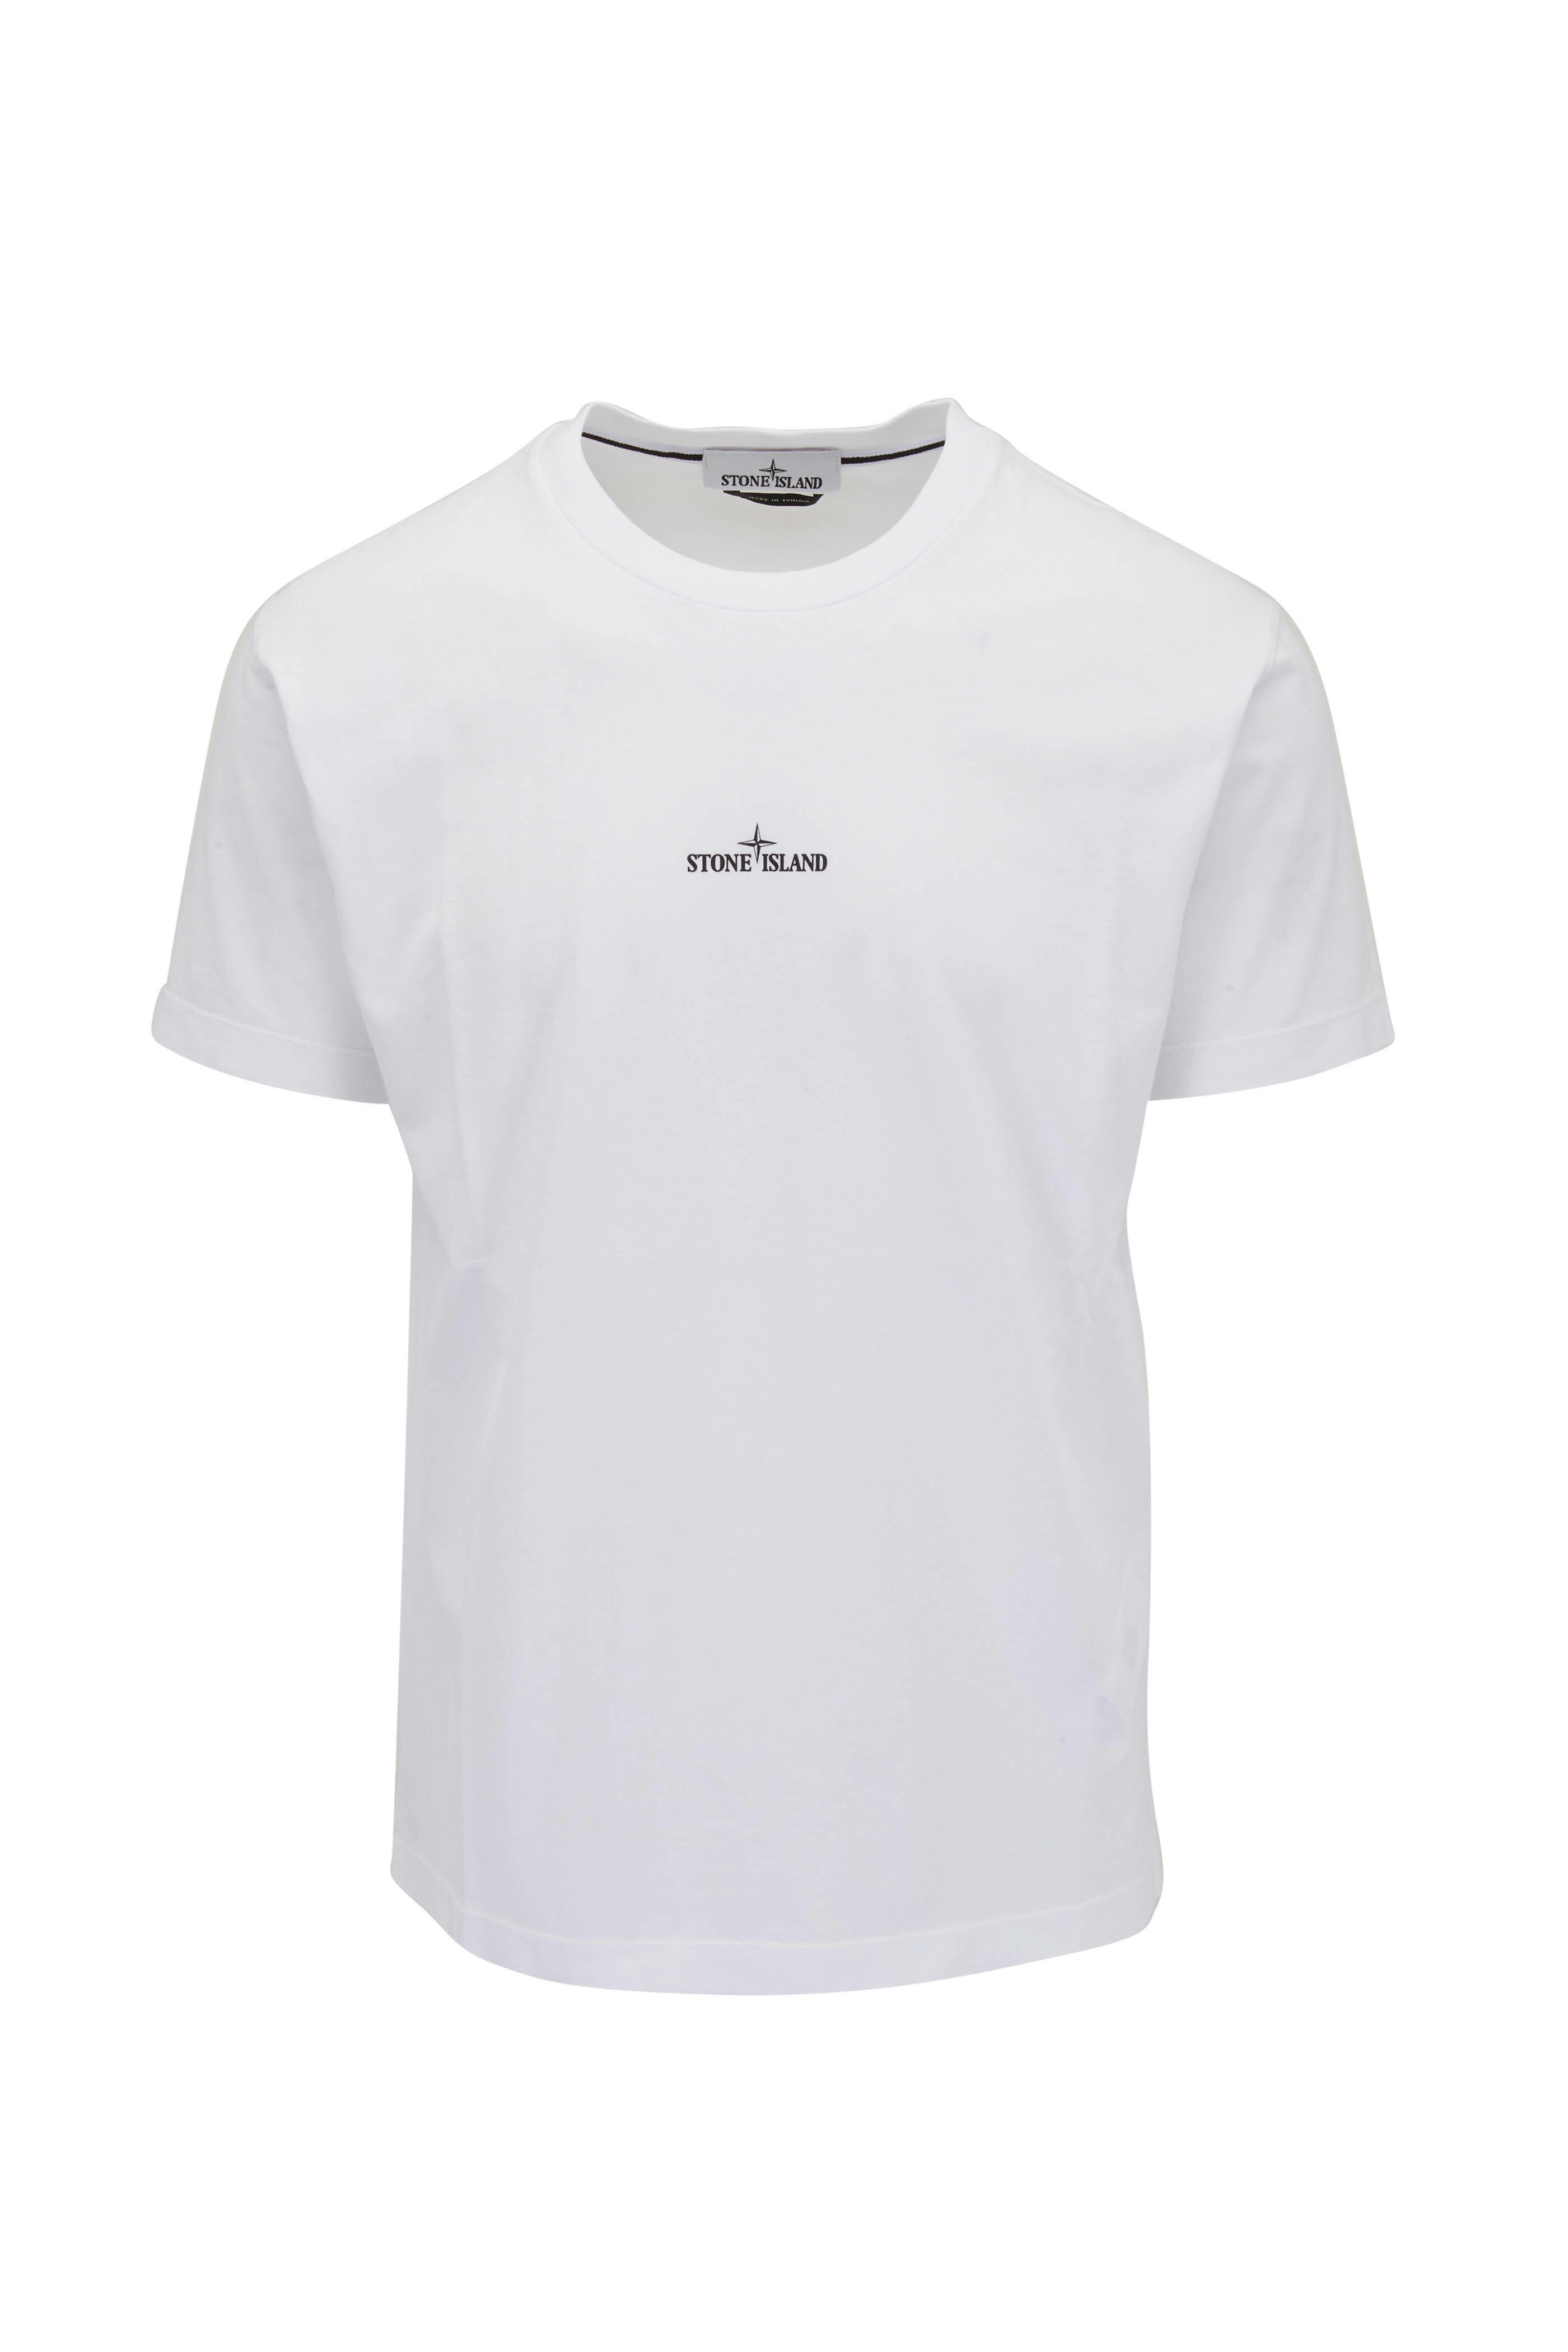 Stone Island - White Compass Graphic T-Shirt | Mitchell Stores